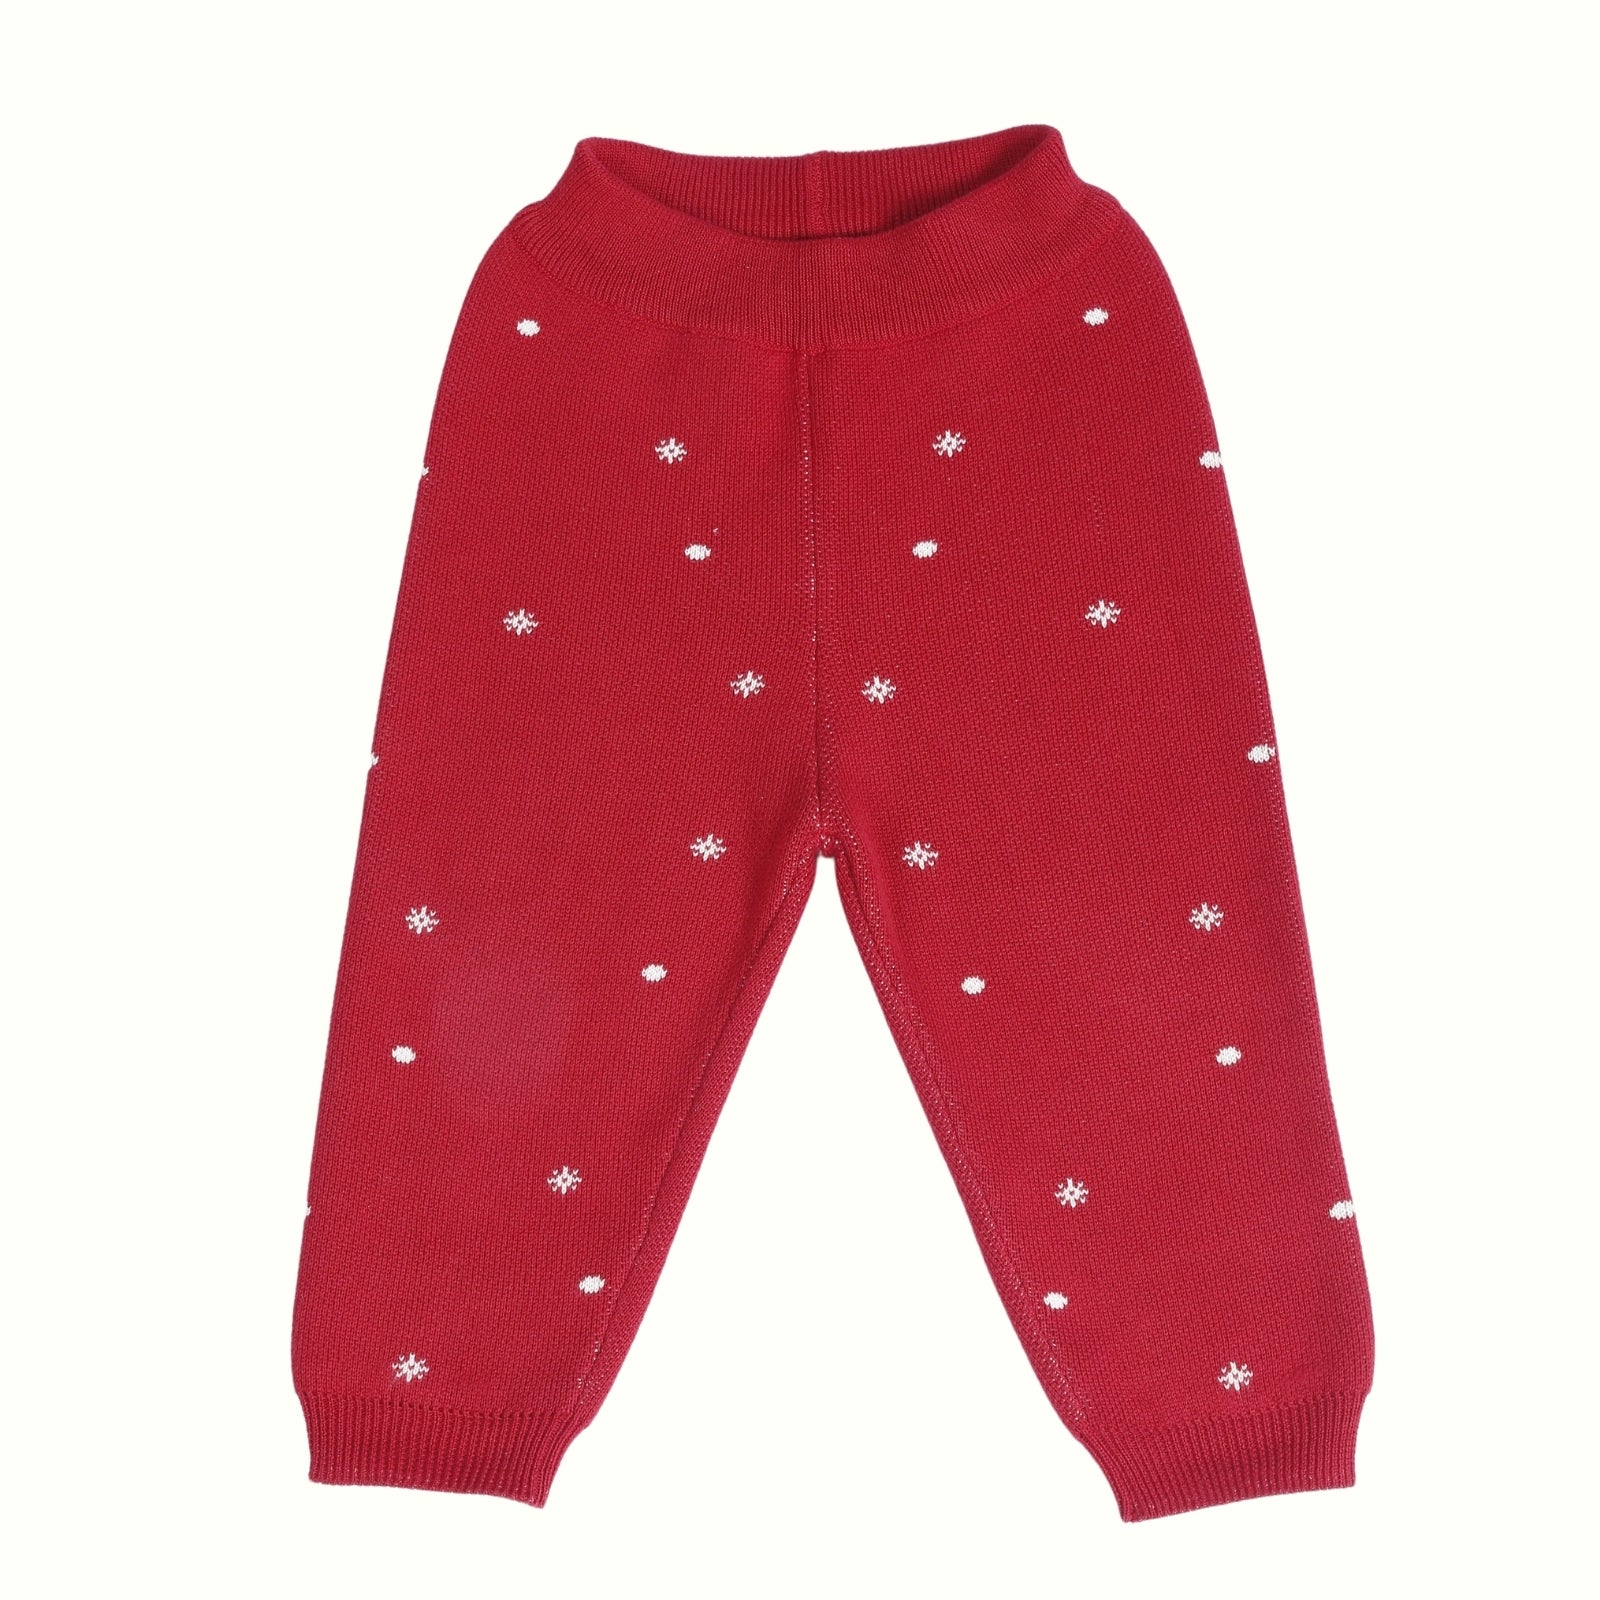 Greendeer Hearth Warming Bear Jacquard 100% Cotton Sweater - Powder Blue & Cherry Red Set of 2